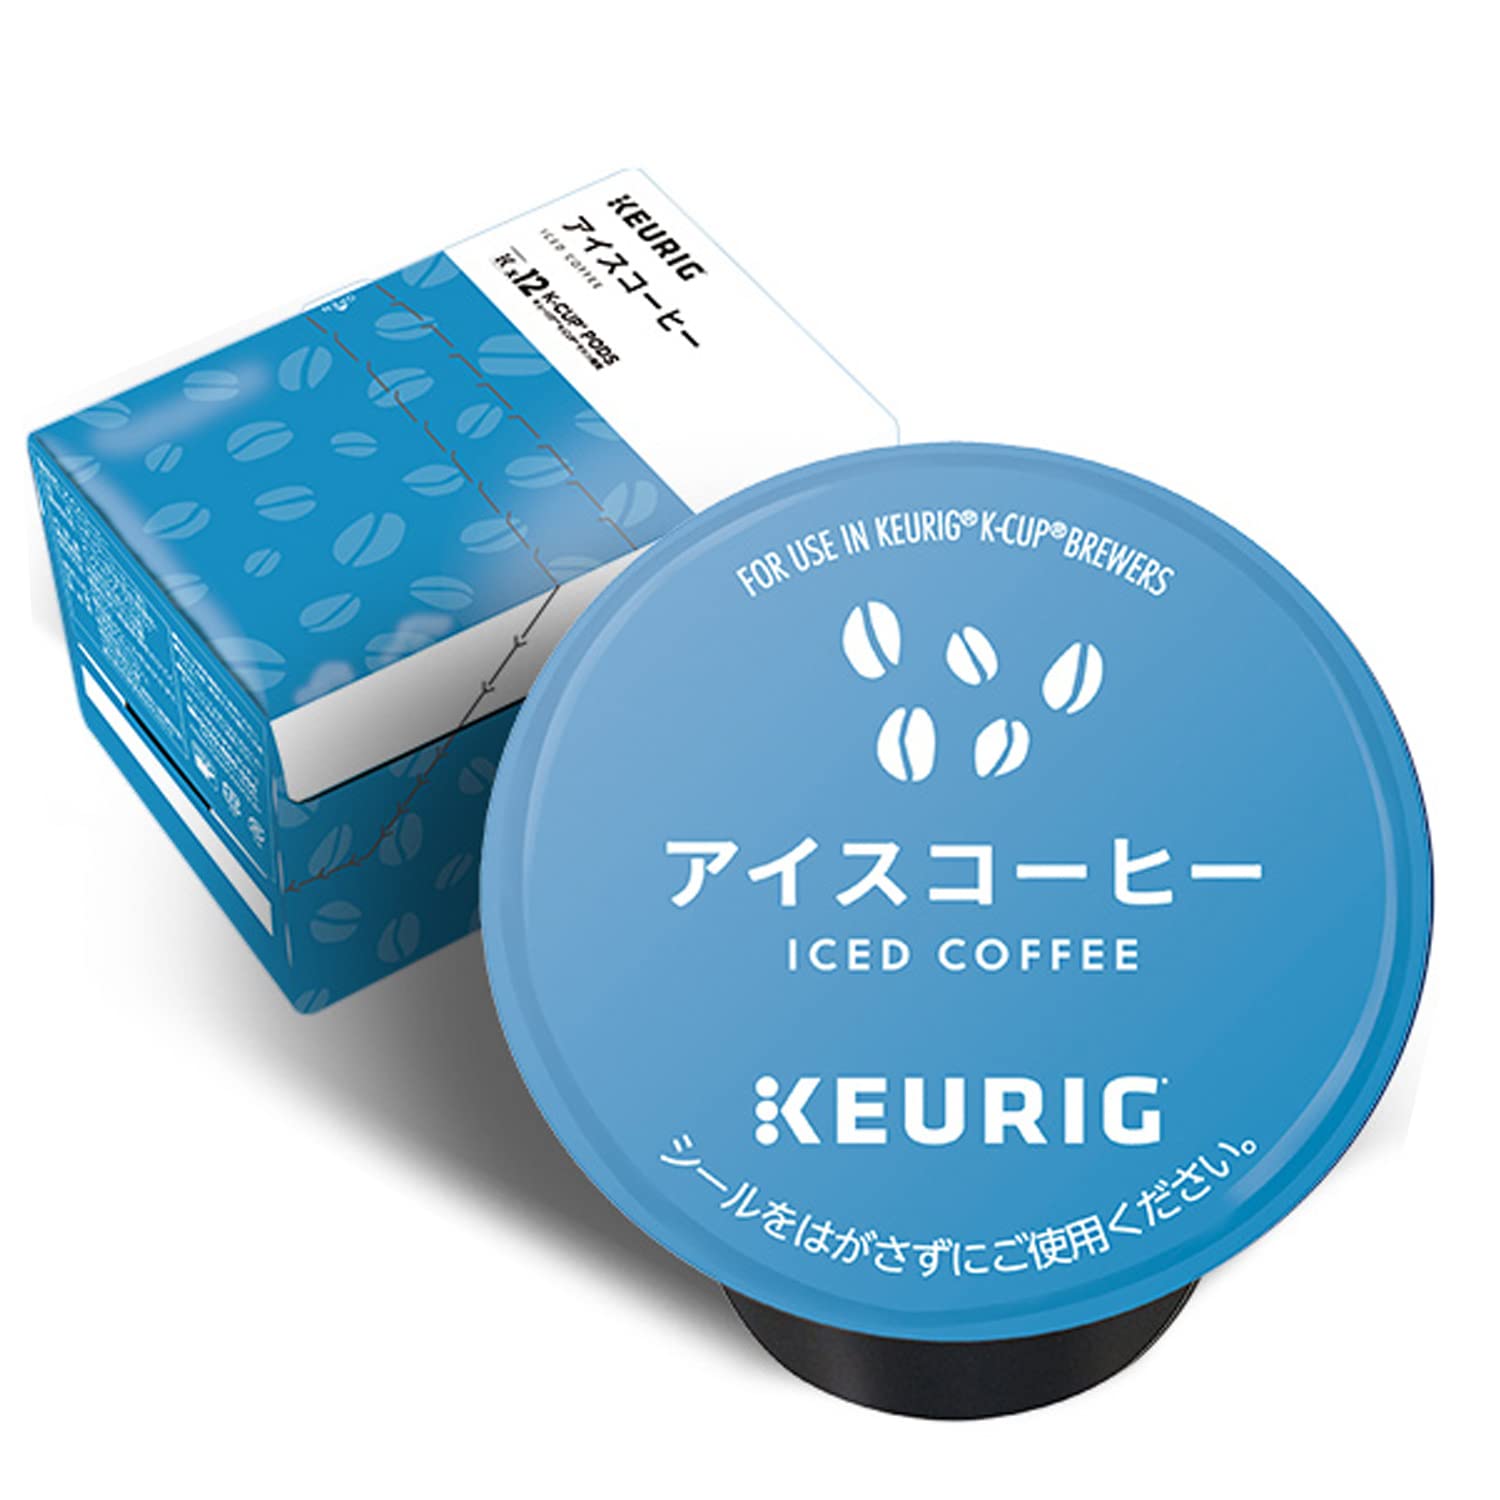 Keurig(キューリグ) アイスコーヒー (10g×12個入) 8箱セット 96杯分 K-cup Kカップ カプセル式コーヒー SC1901*8